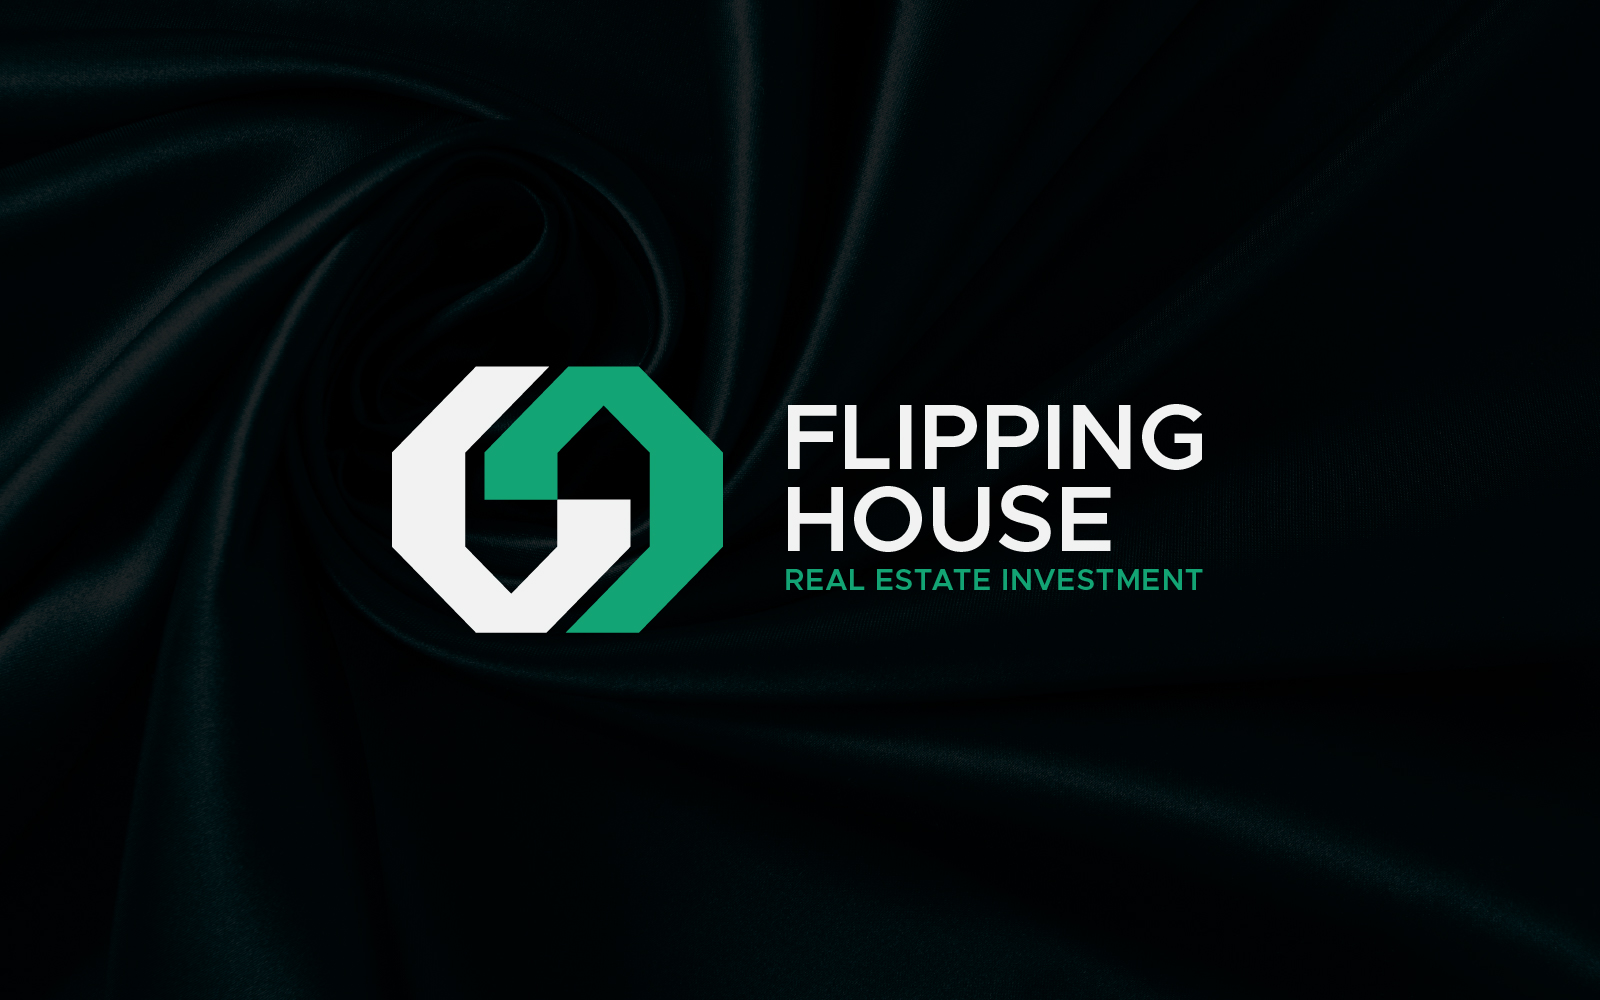 Real estate flipping house logo design